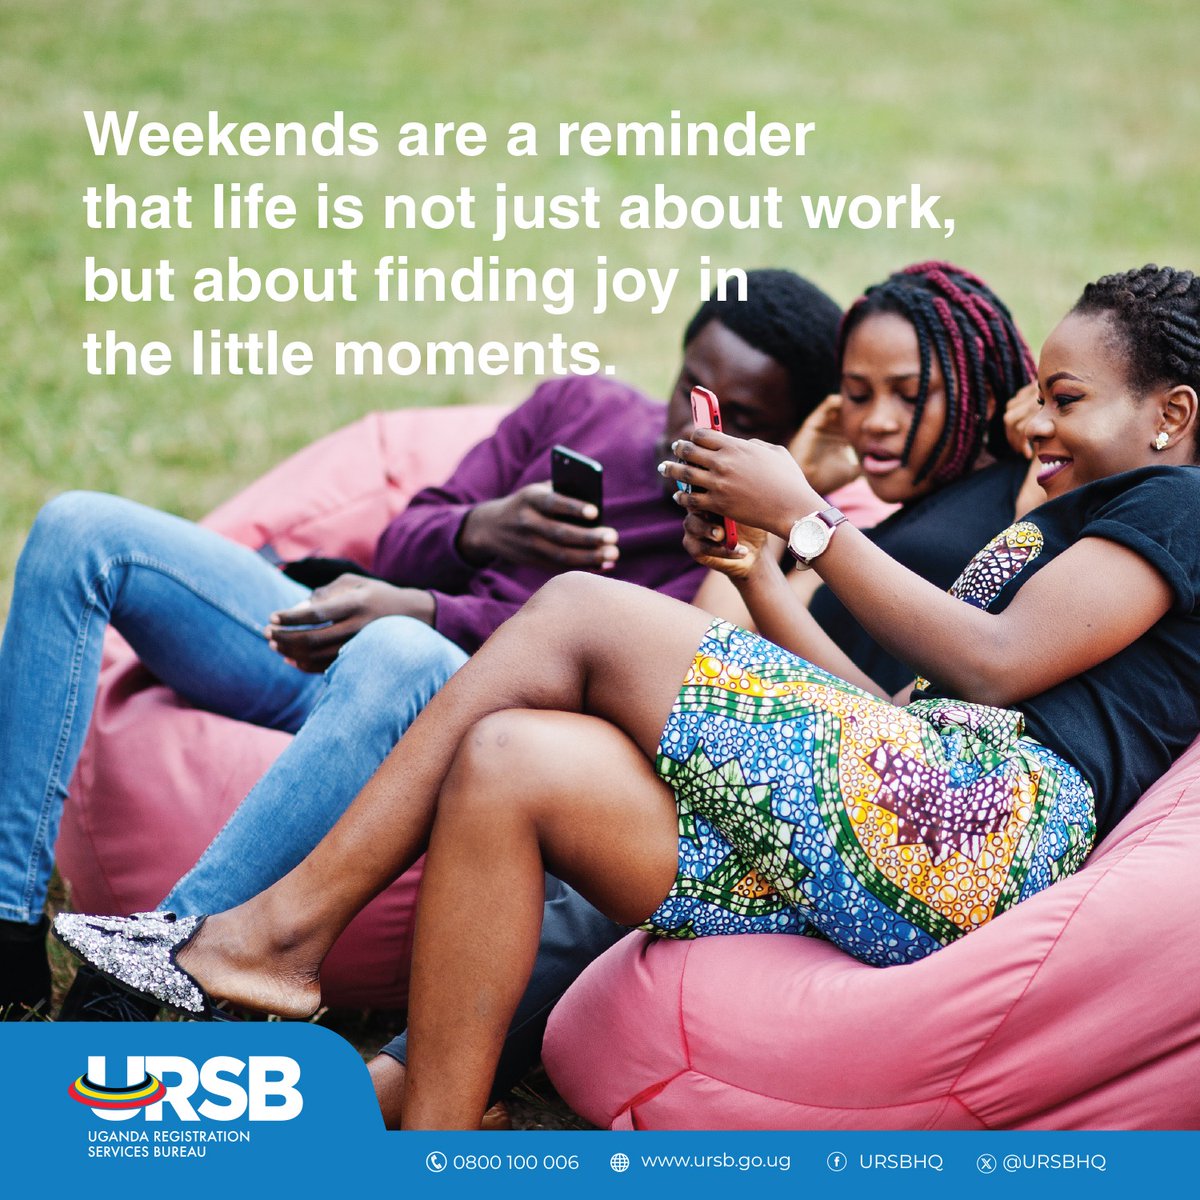 Savor the weekend and cherish life's little joys. #SaturdayVibes.